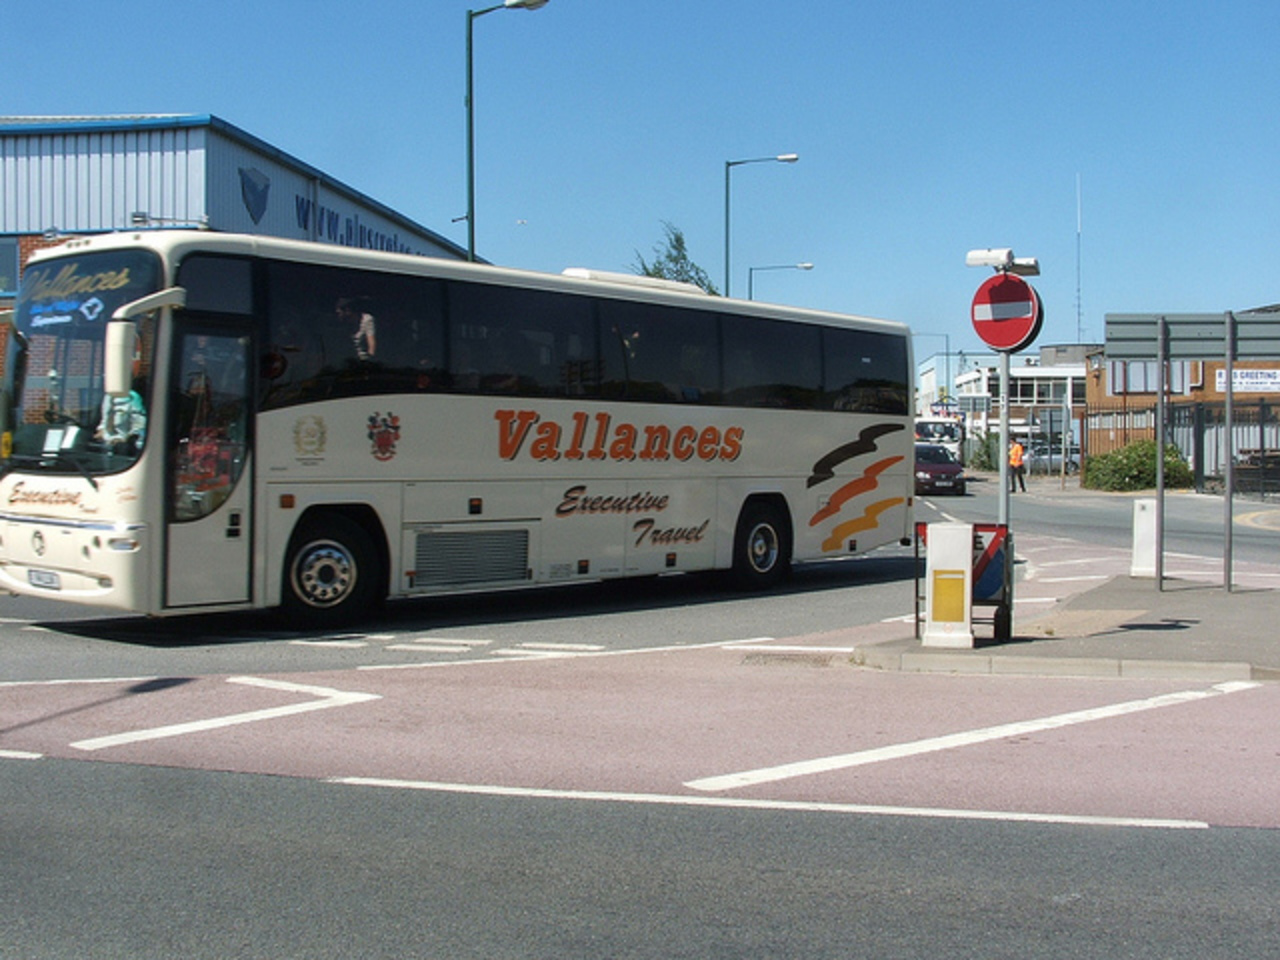 Vallances Plaxton bodied Volvo V4 LLN | Flickr - Photo Sharing!